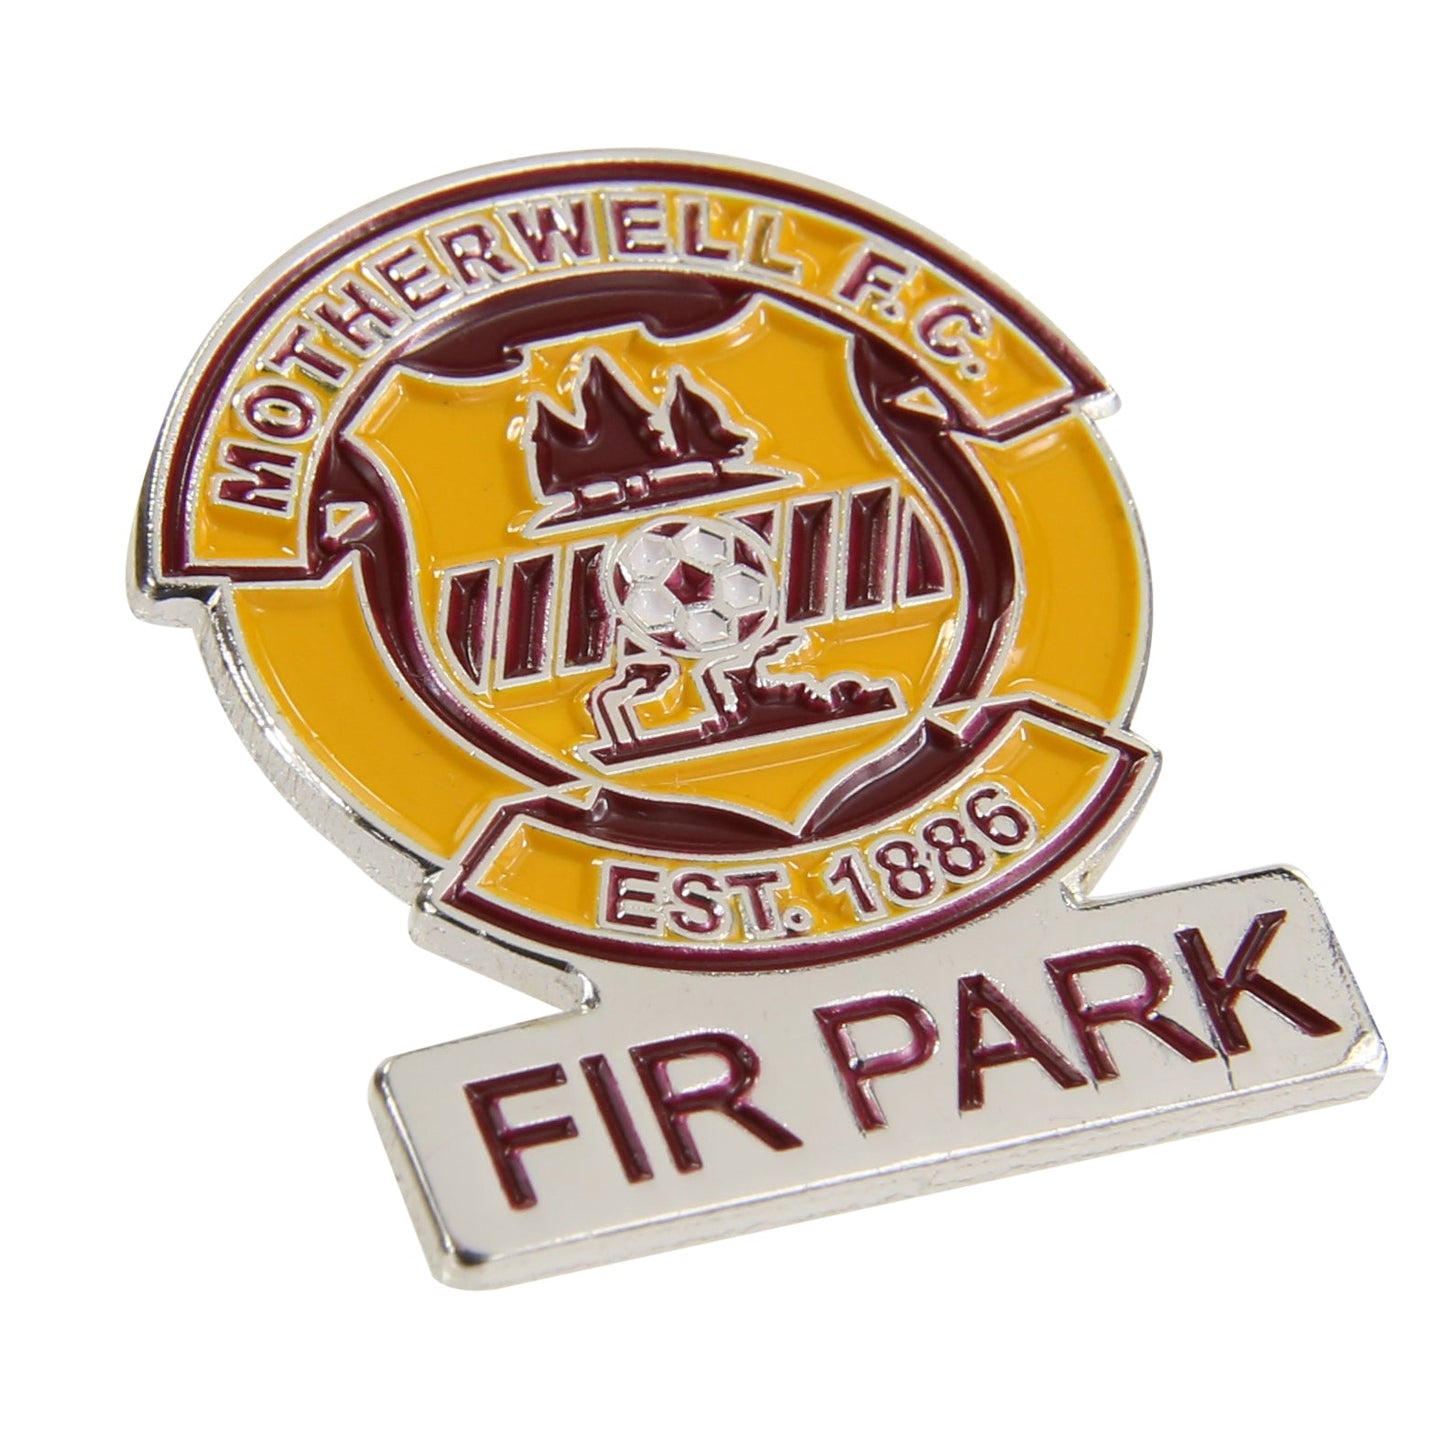 Fir Park Pin Badge